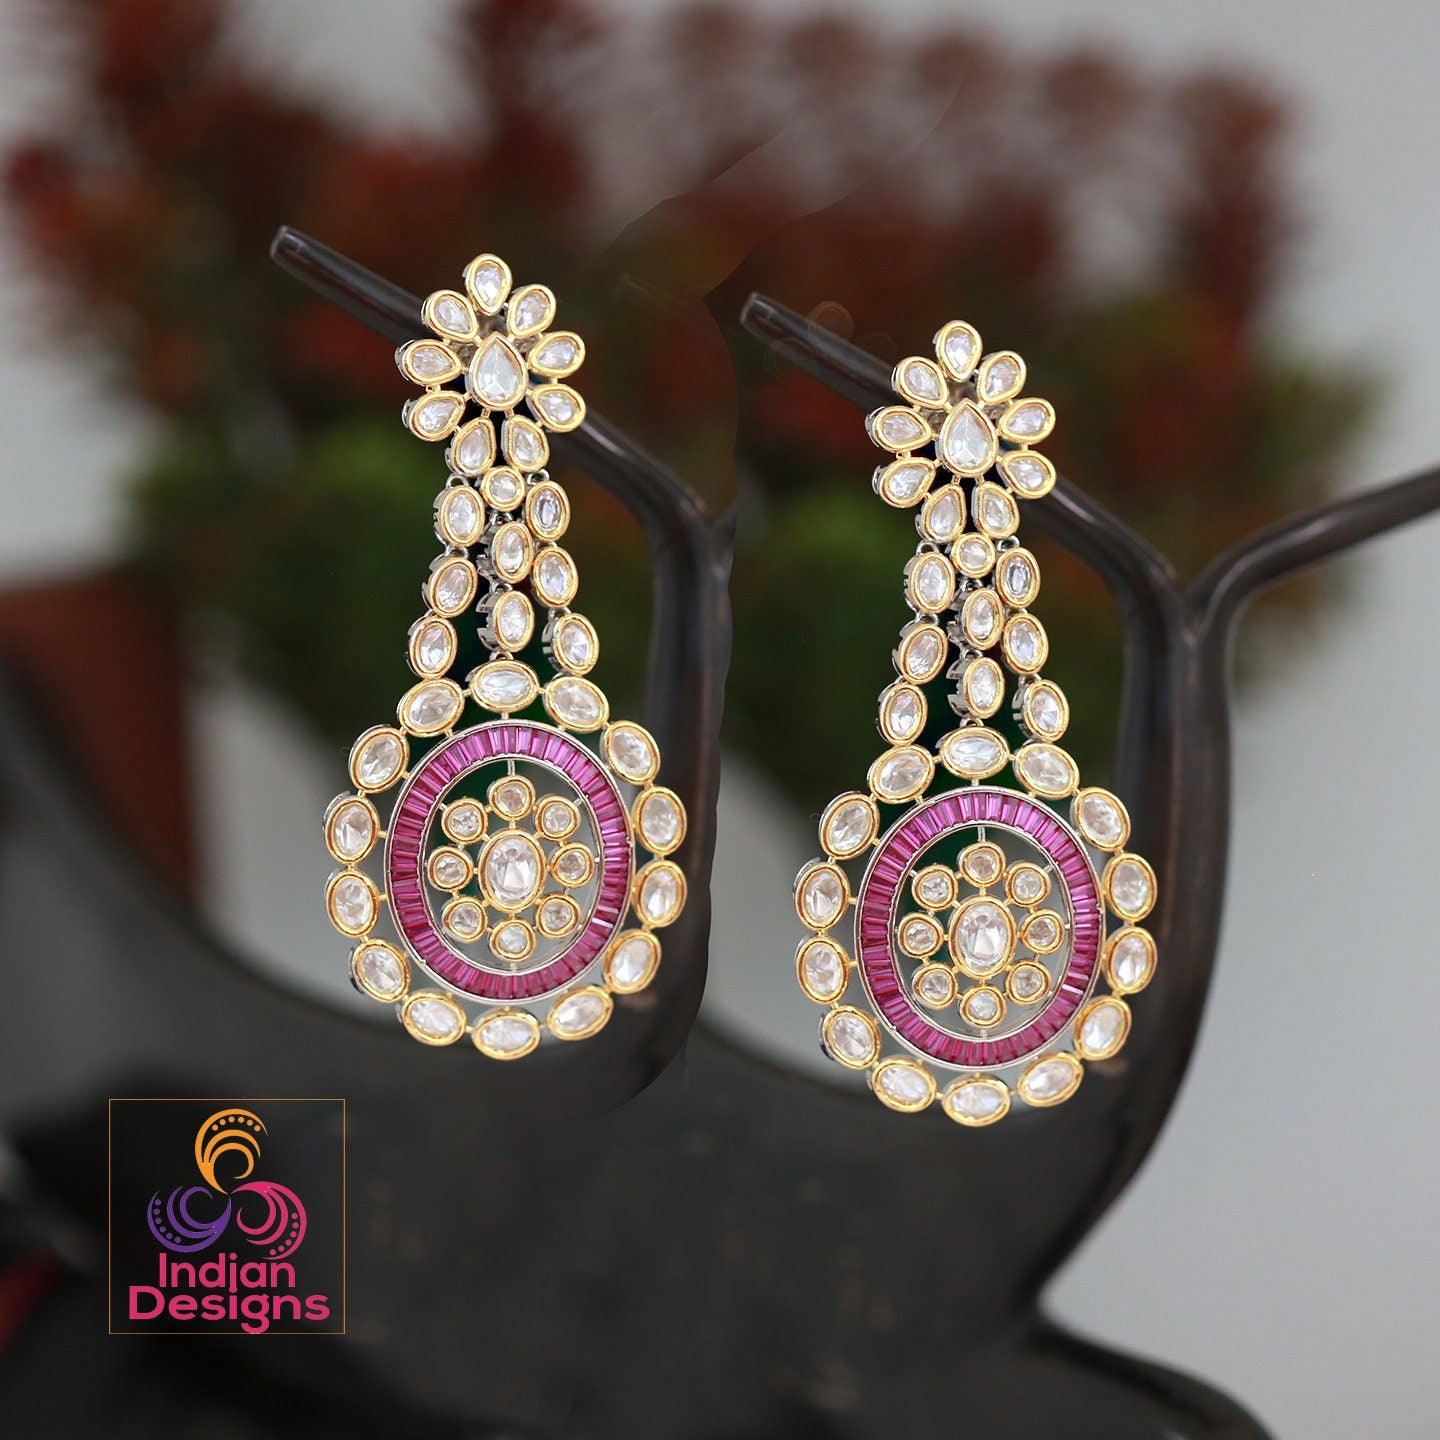 Jawaharat Beautiful Necklace with Beautiful Earrings Kundan Jewellery Set D  | eBay